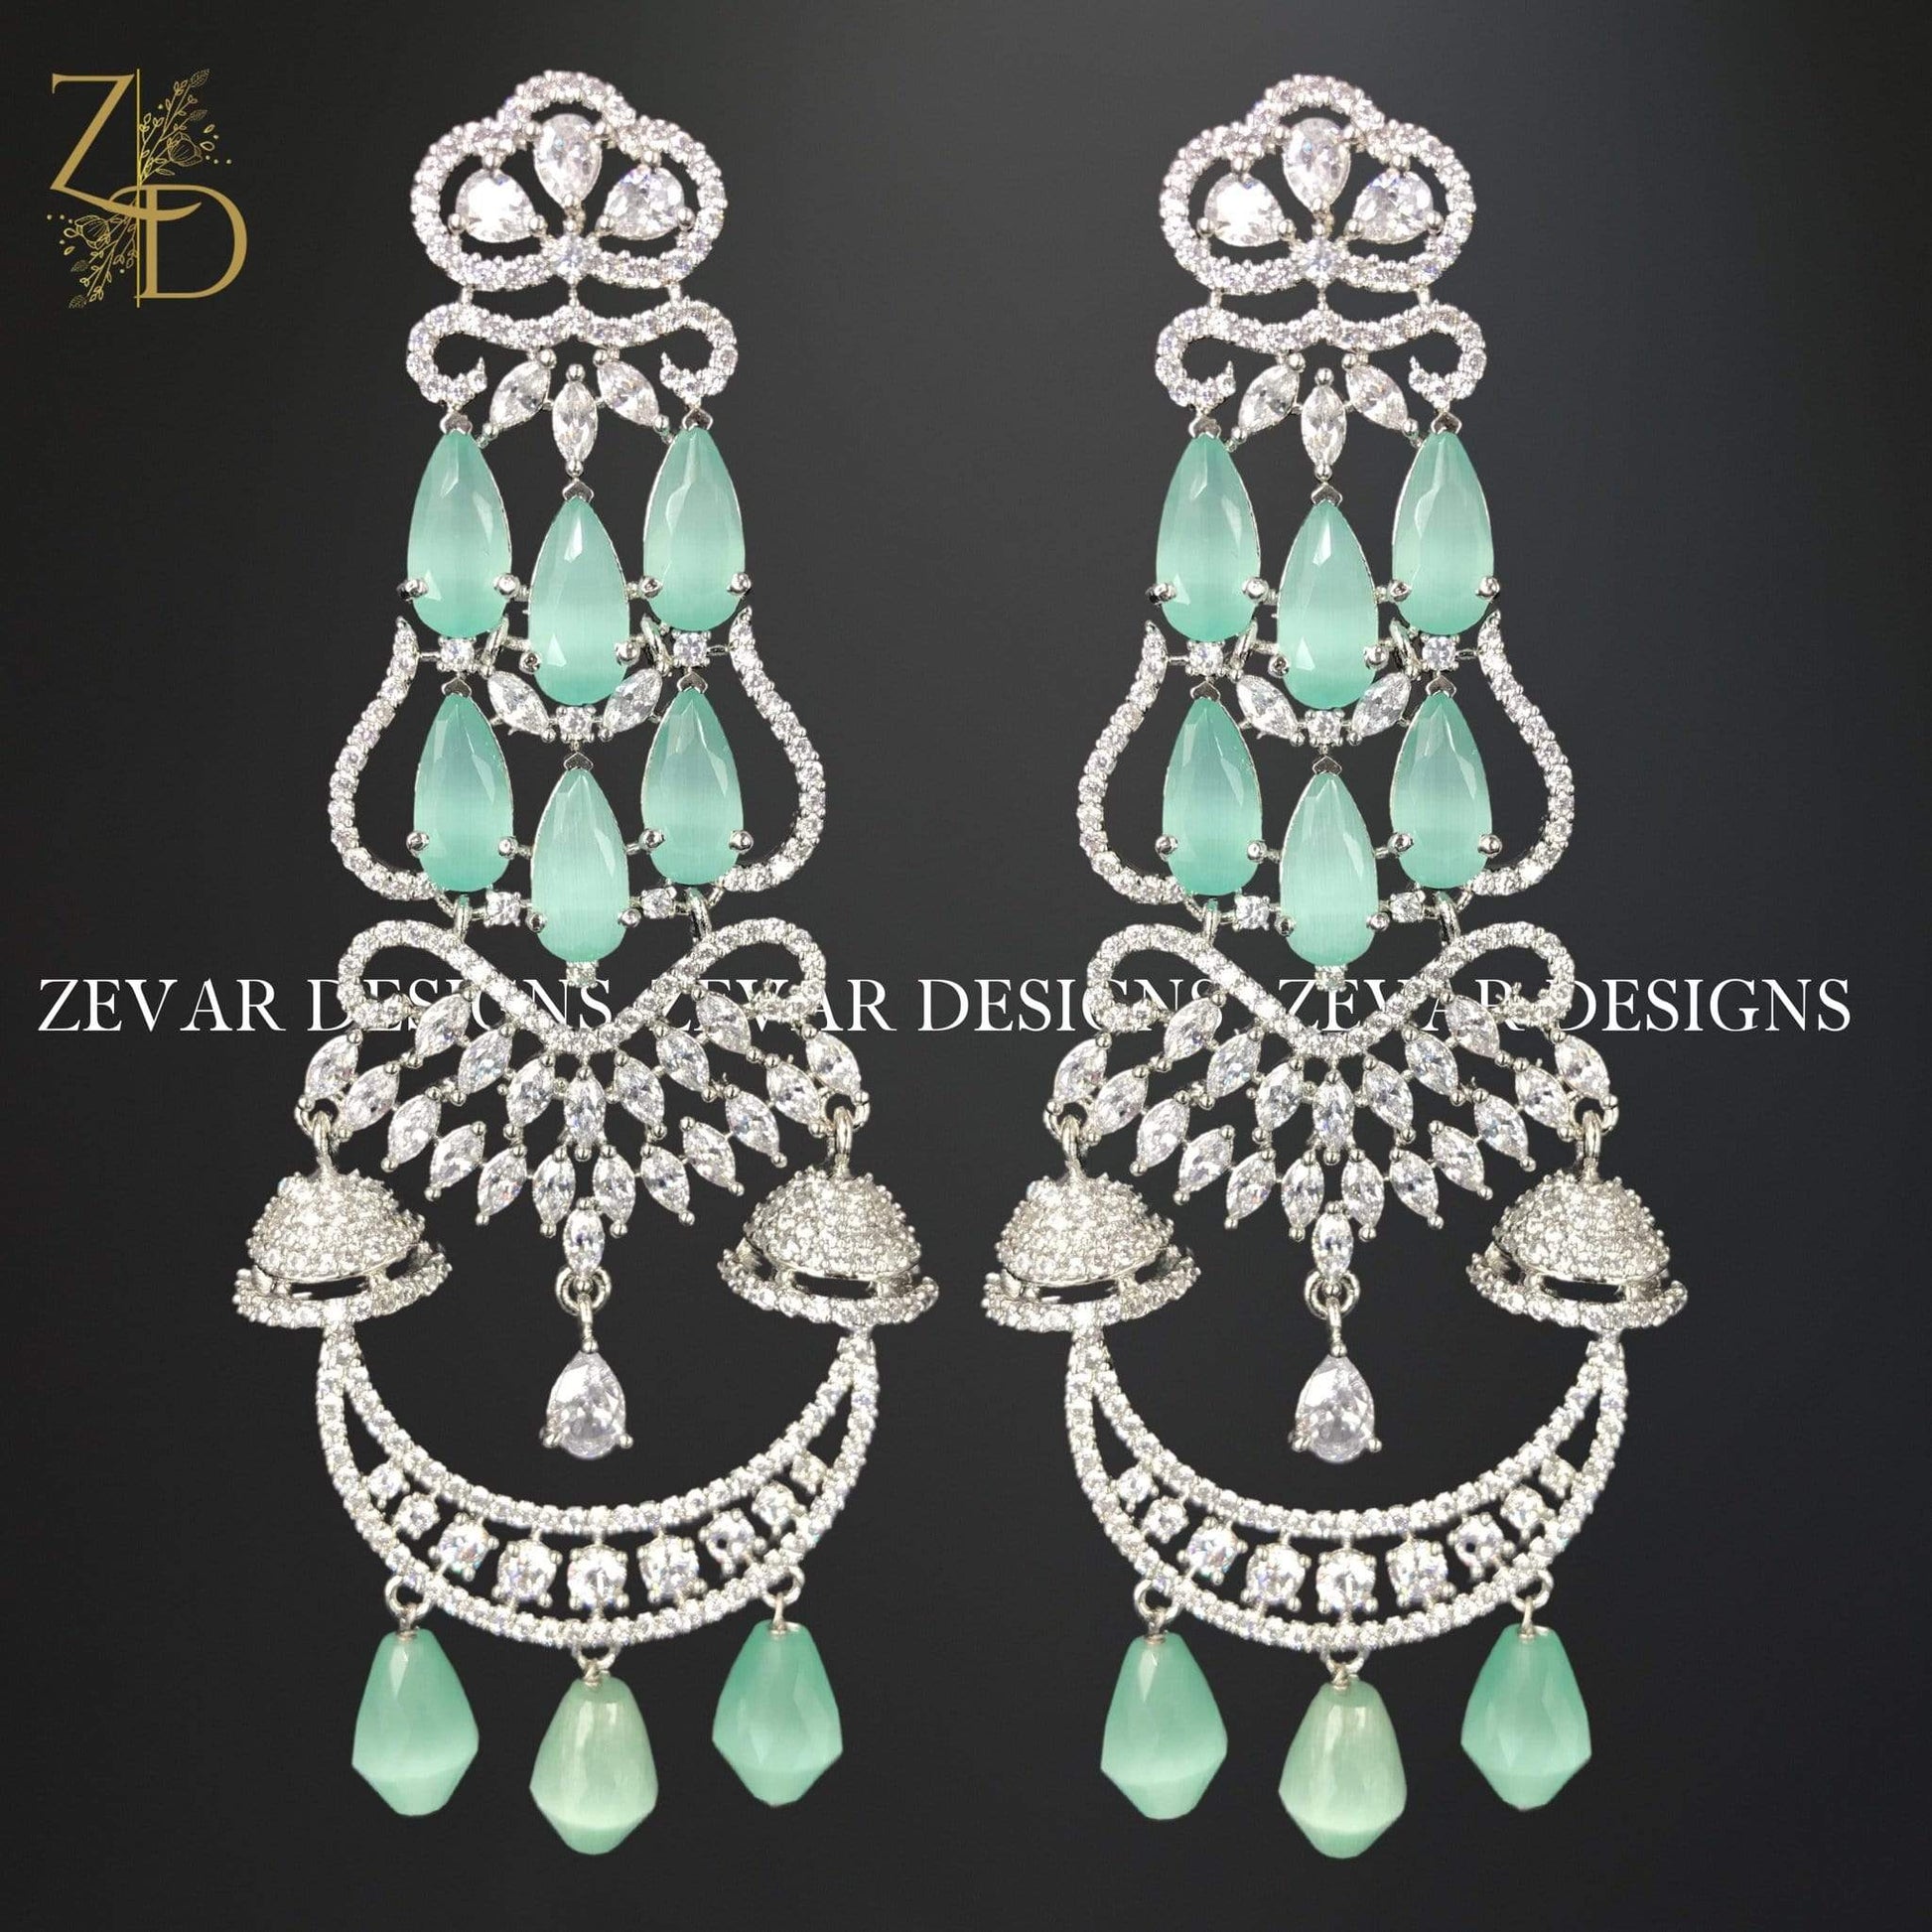 Zevar Designs Zirconia Earrings in Mint Green and White Rhodium